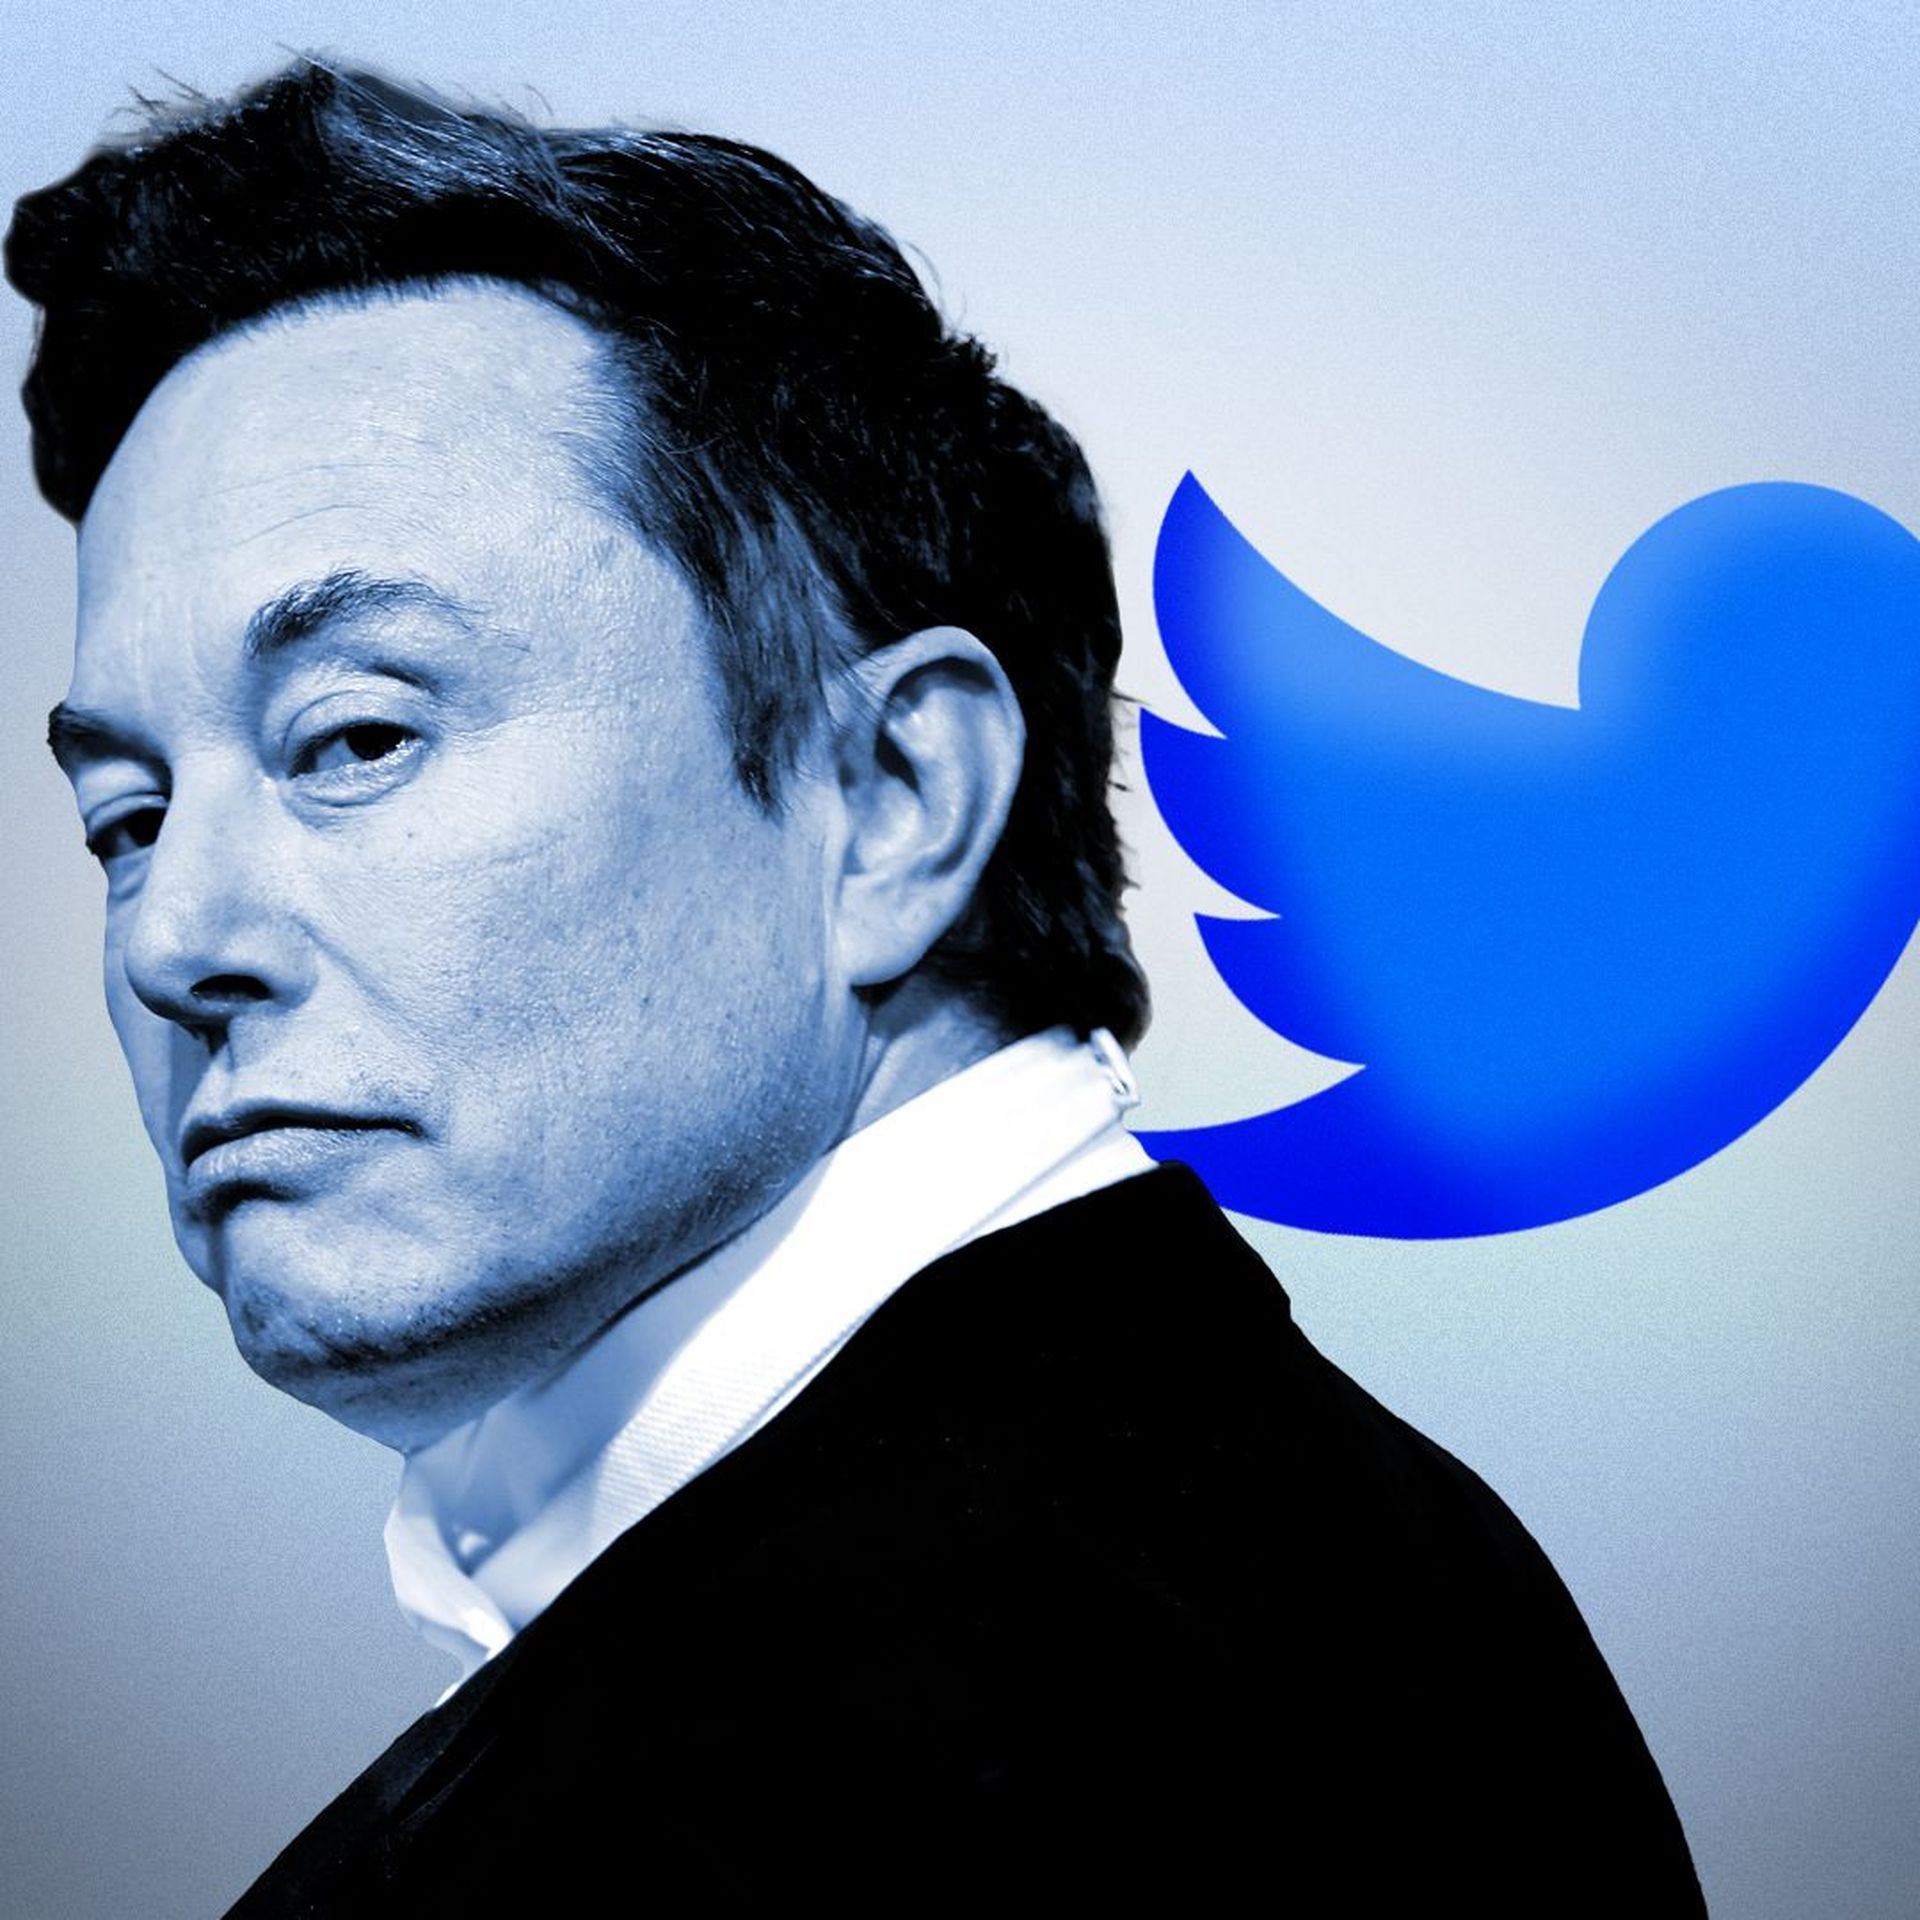 Photo illustration of Elon Musk next to the twitter logo.